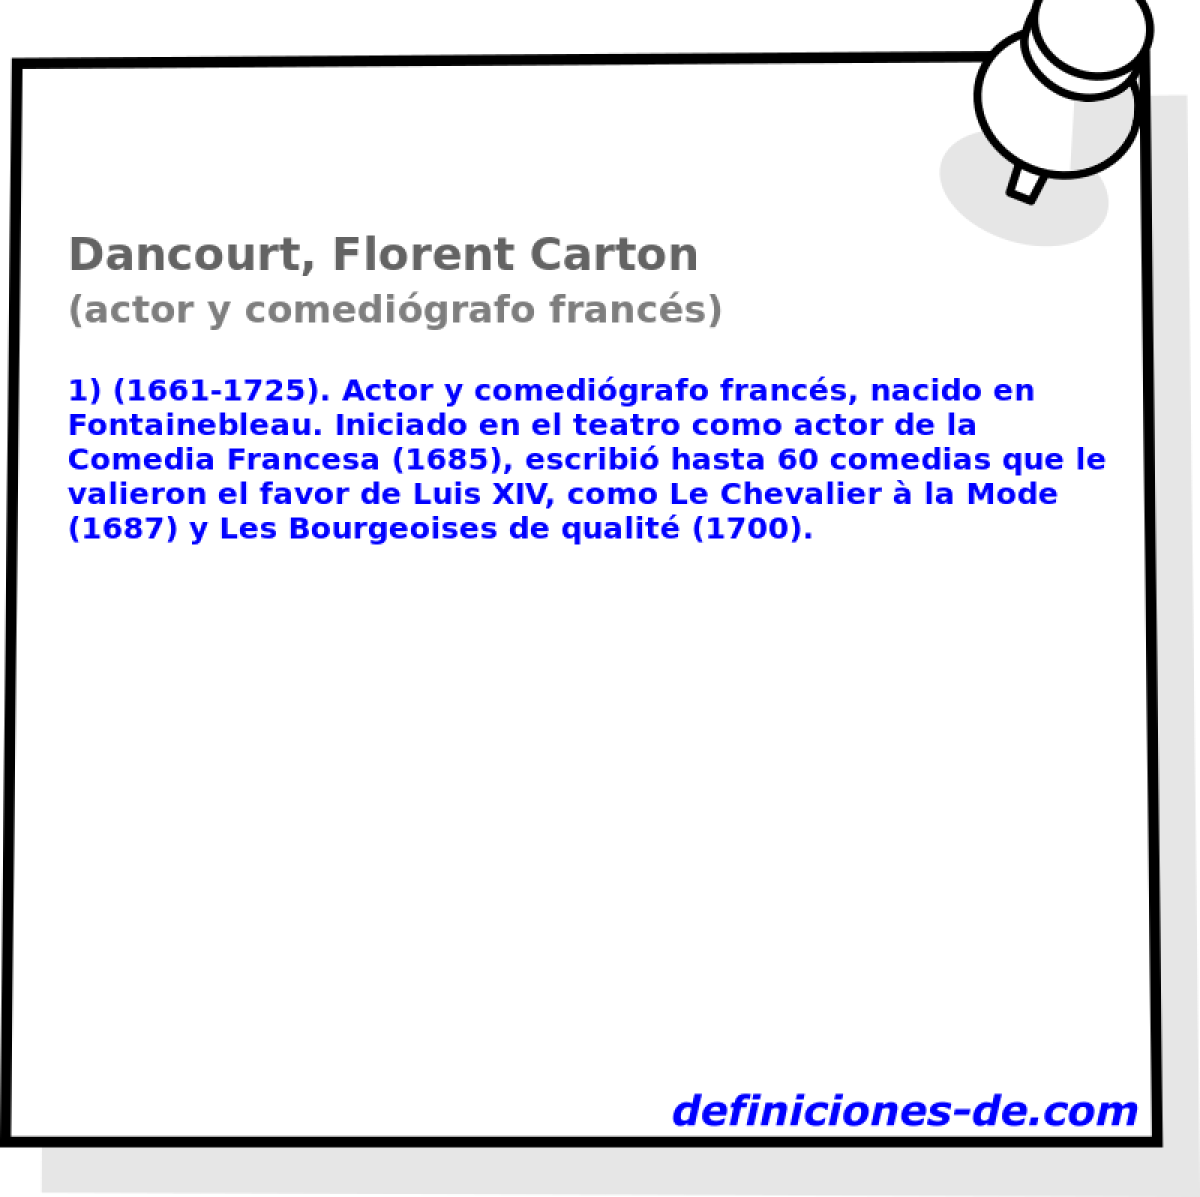 Dancourt, Florent Carton (actor y comedigrafo francs)